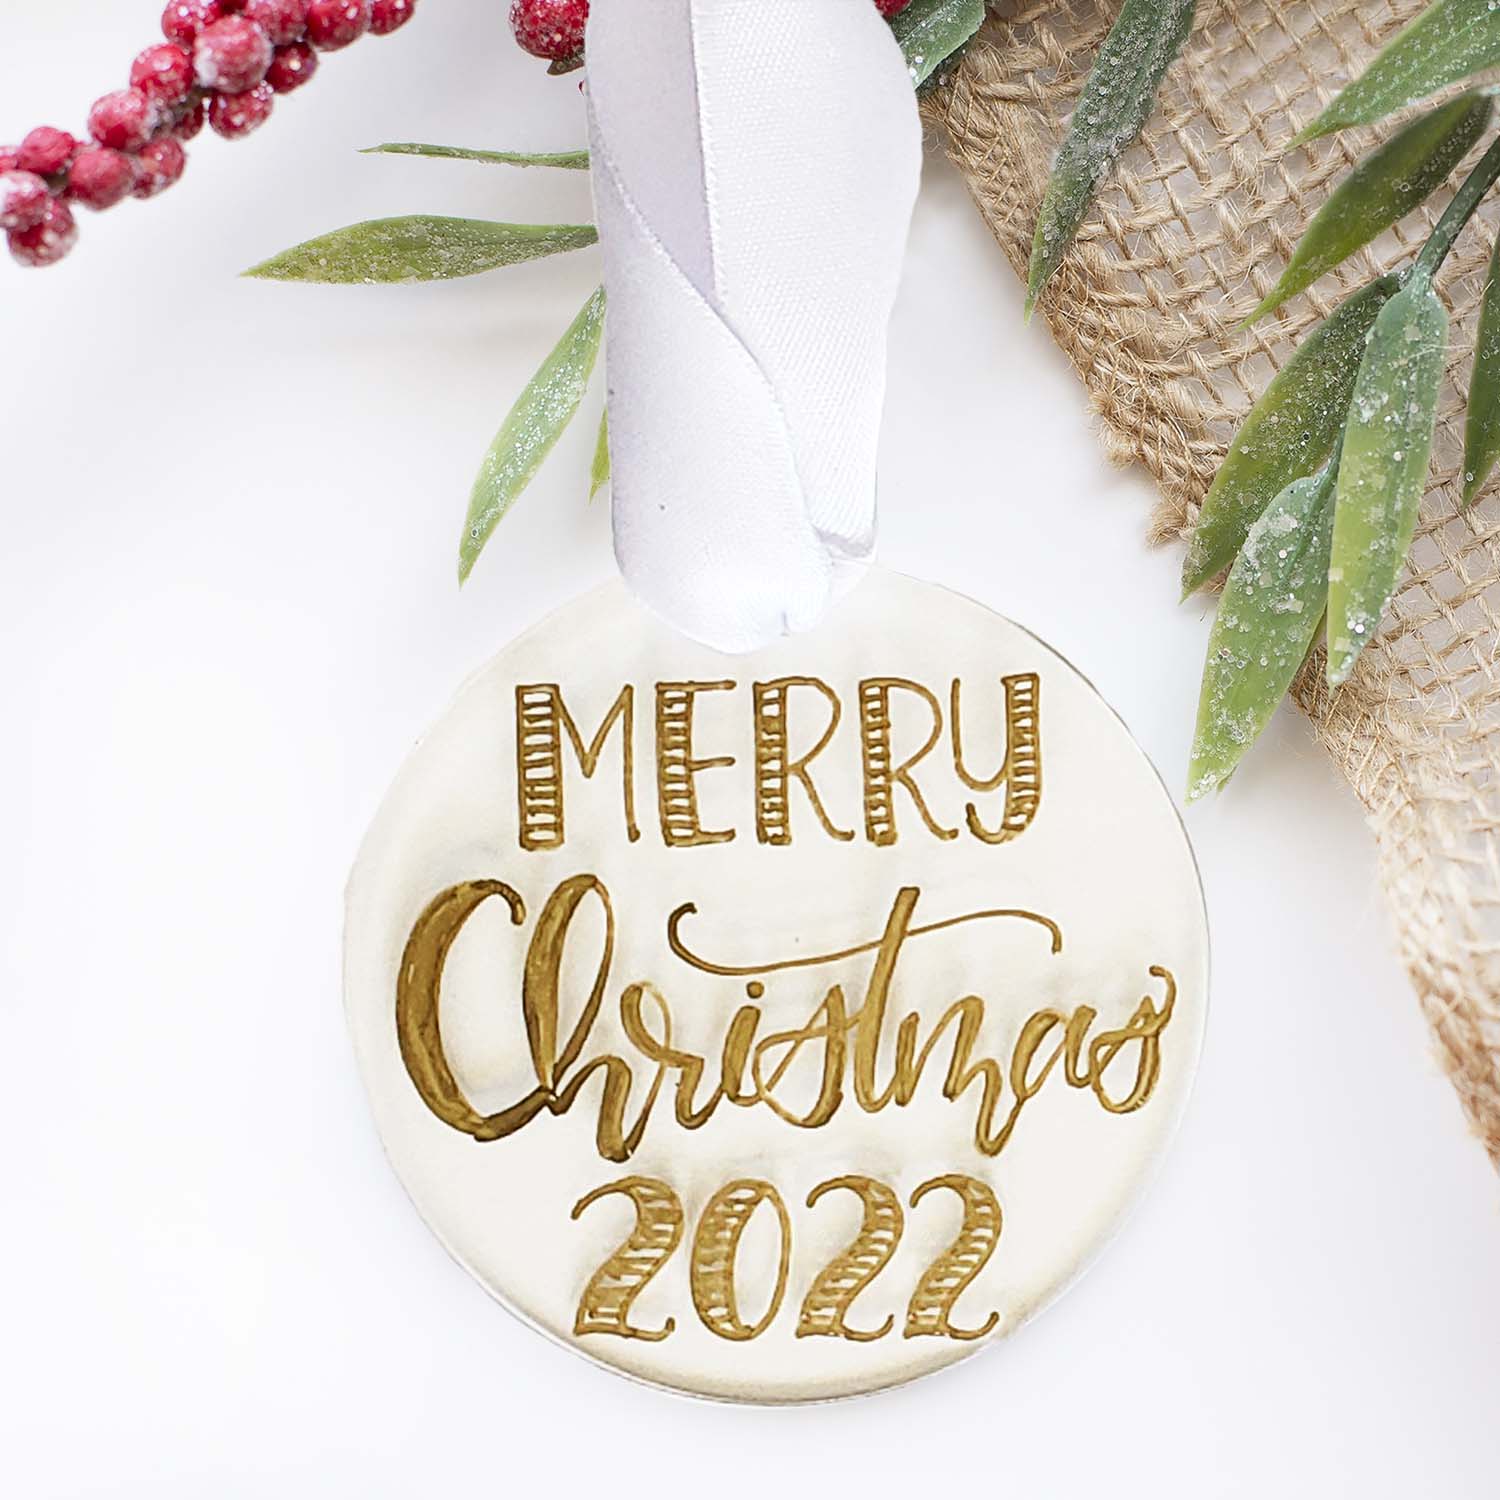 Merry Christmas acrylic ornaments